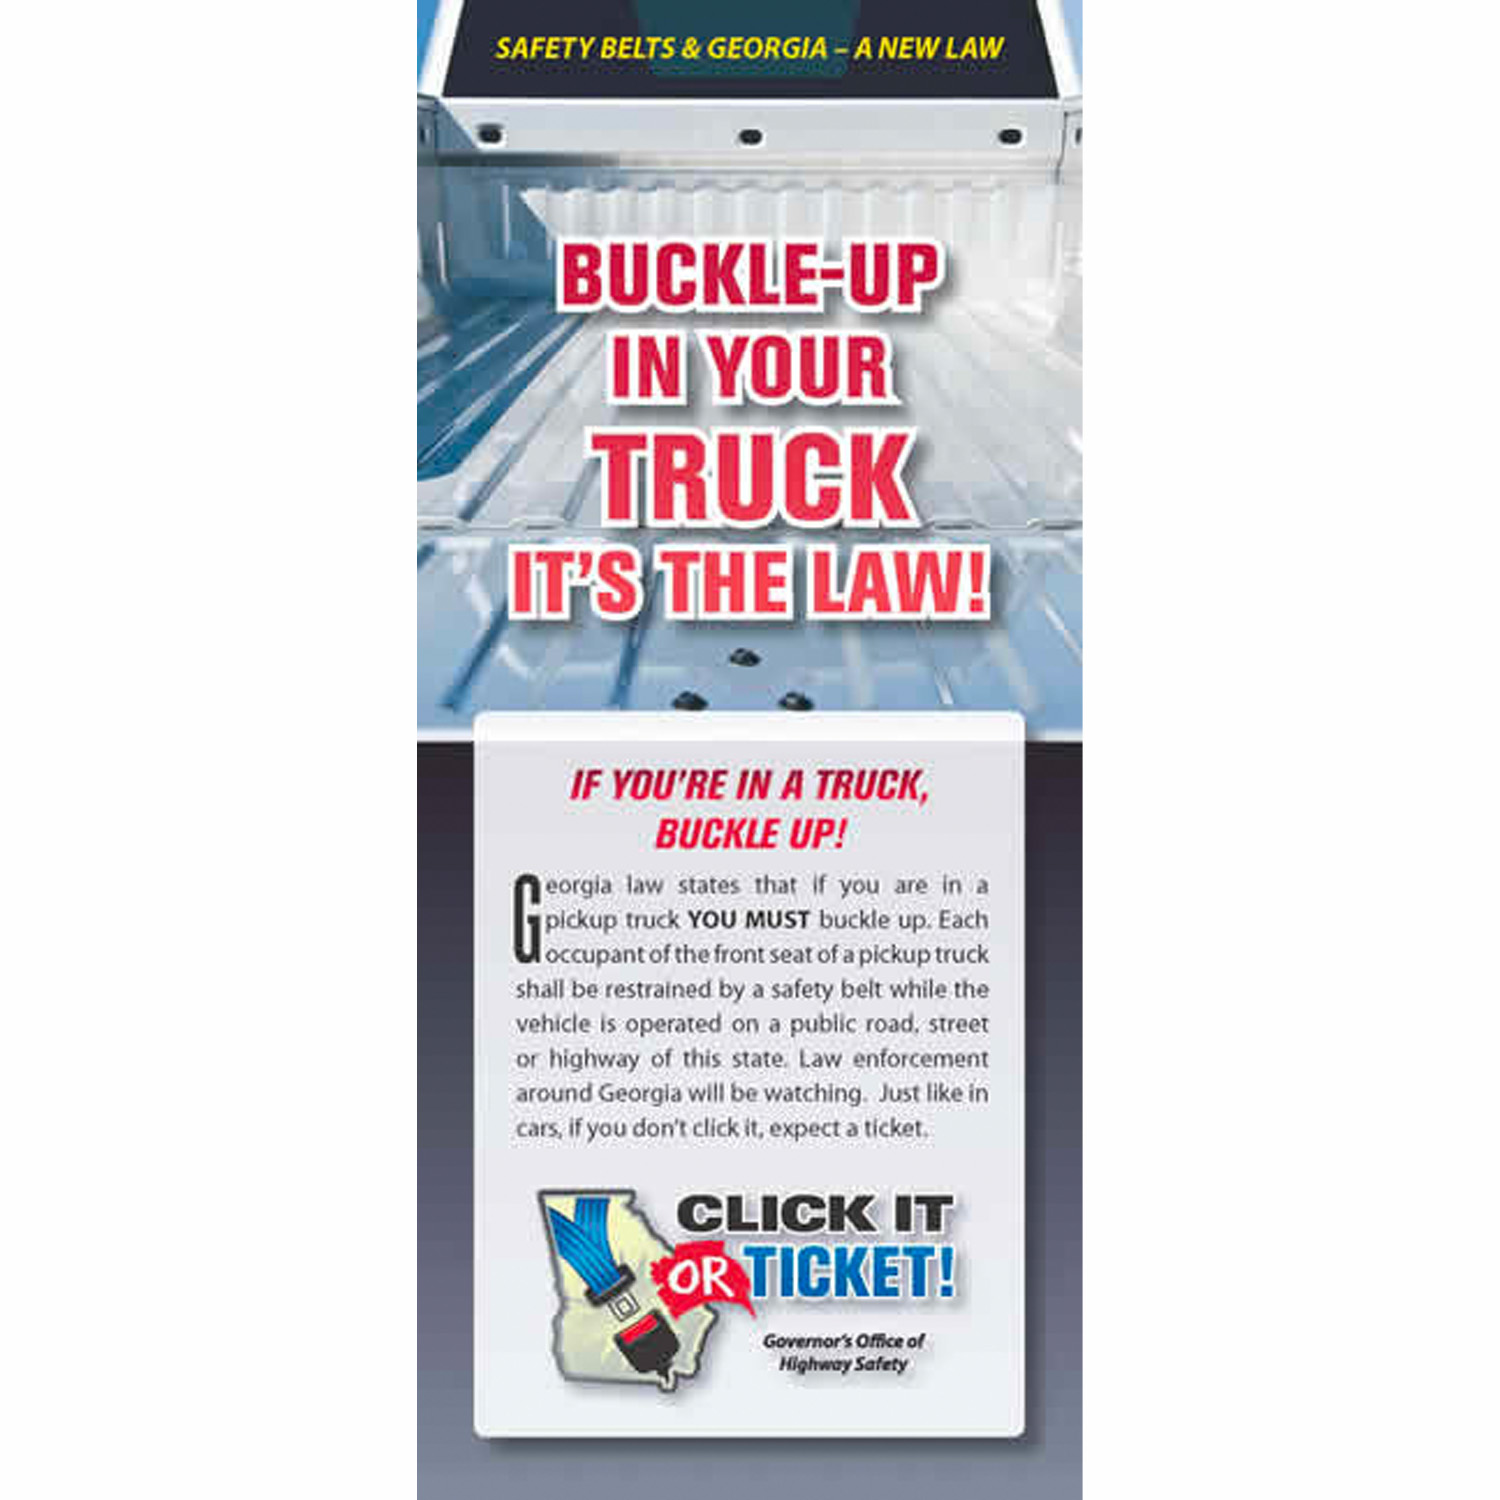 https://www.gahighwaysafety.org/wp-content/uploads/2021/12/Buckle-Up-in-Your-Truck.jpg